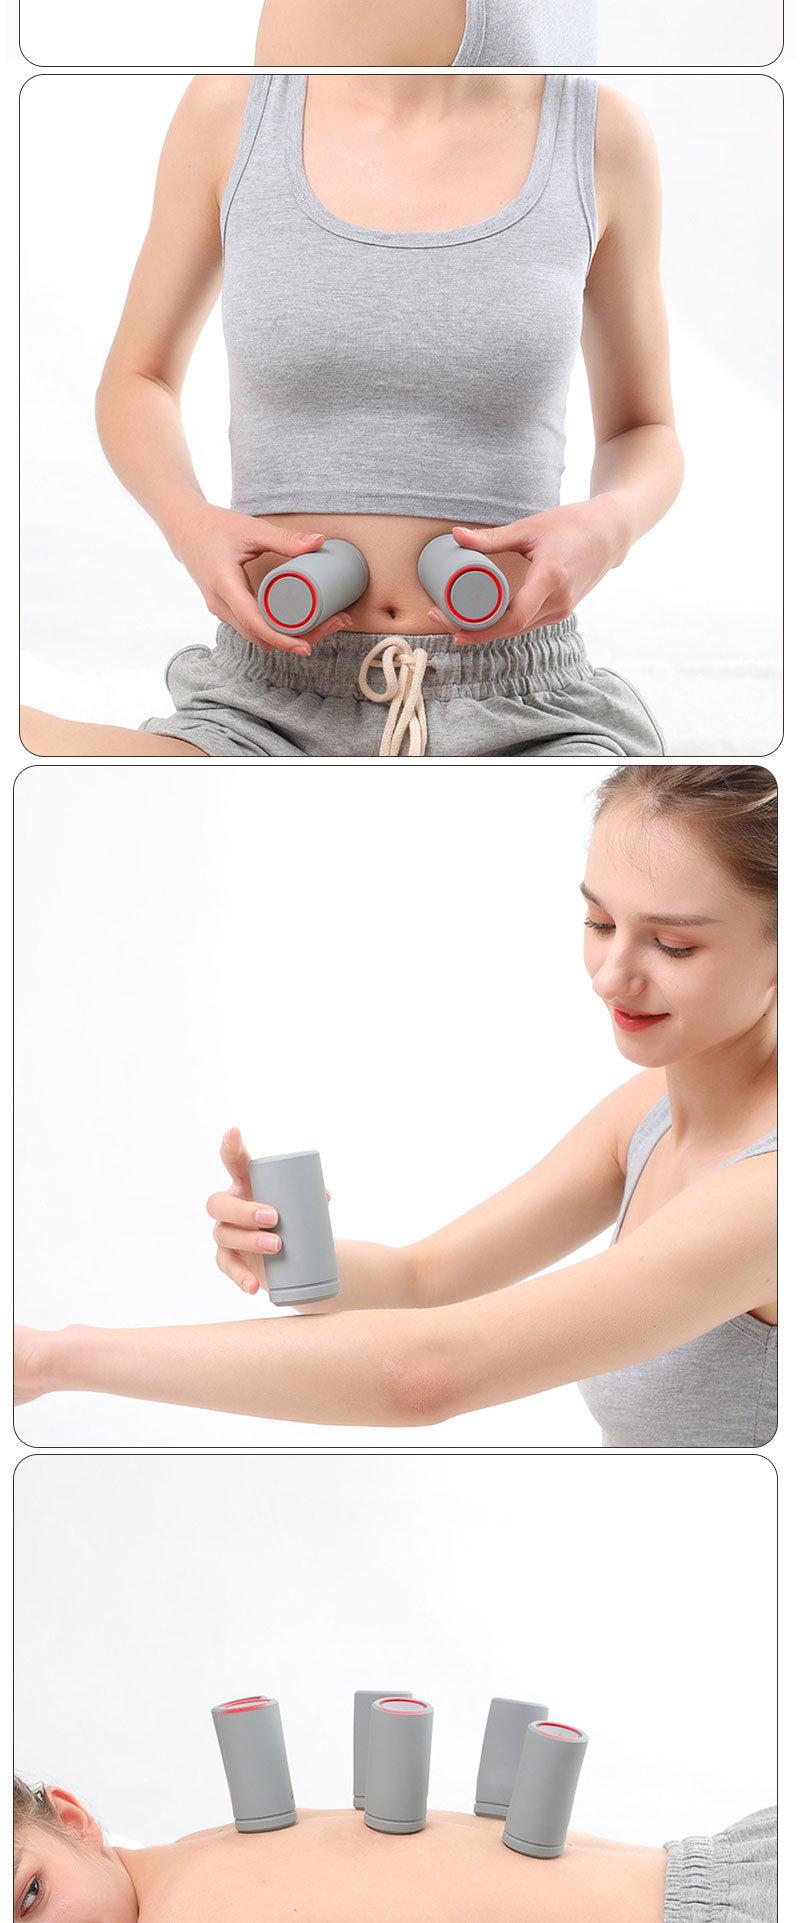 Hezheng Skin-Friendly Negative Pressure Massage Cupping Mini Vacuum Massager